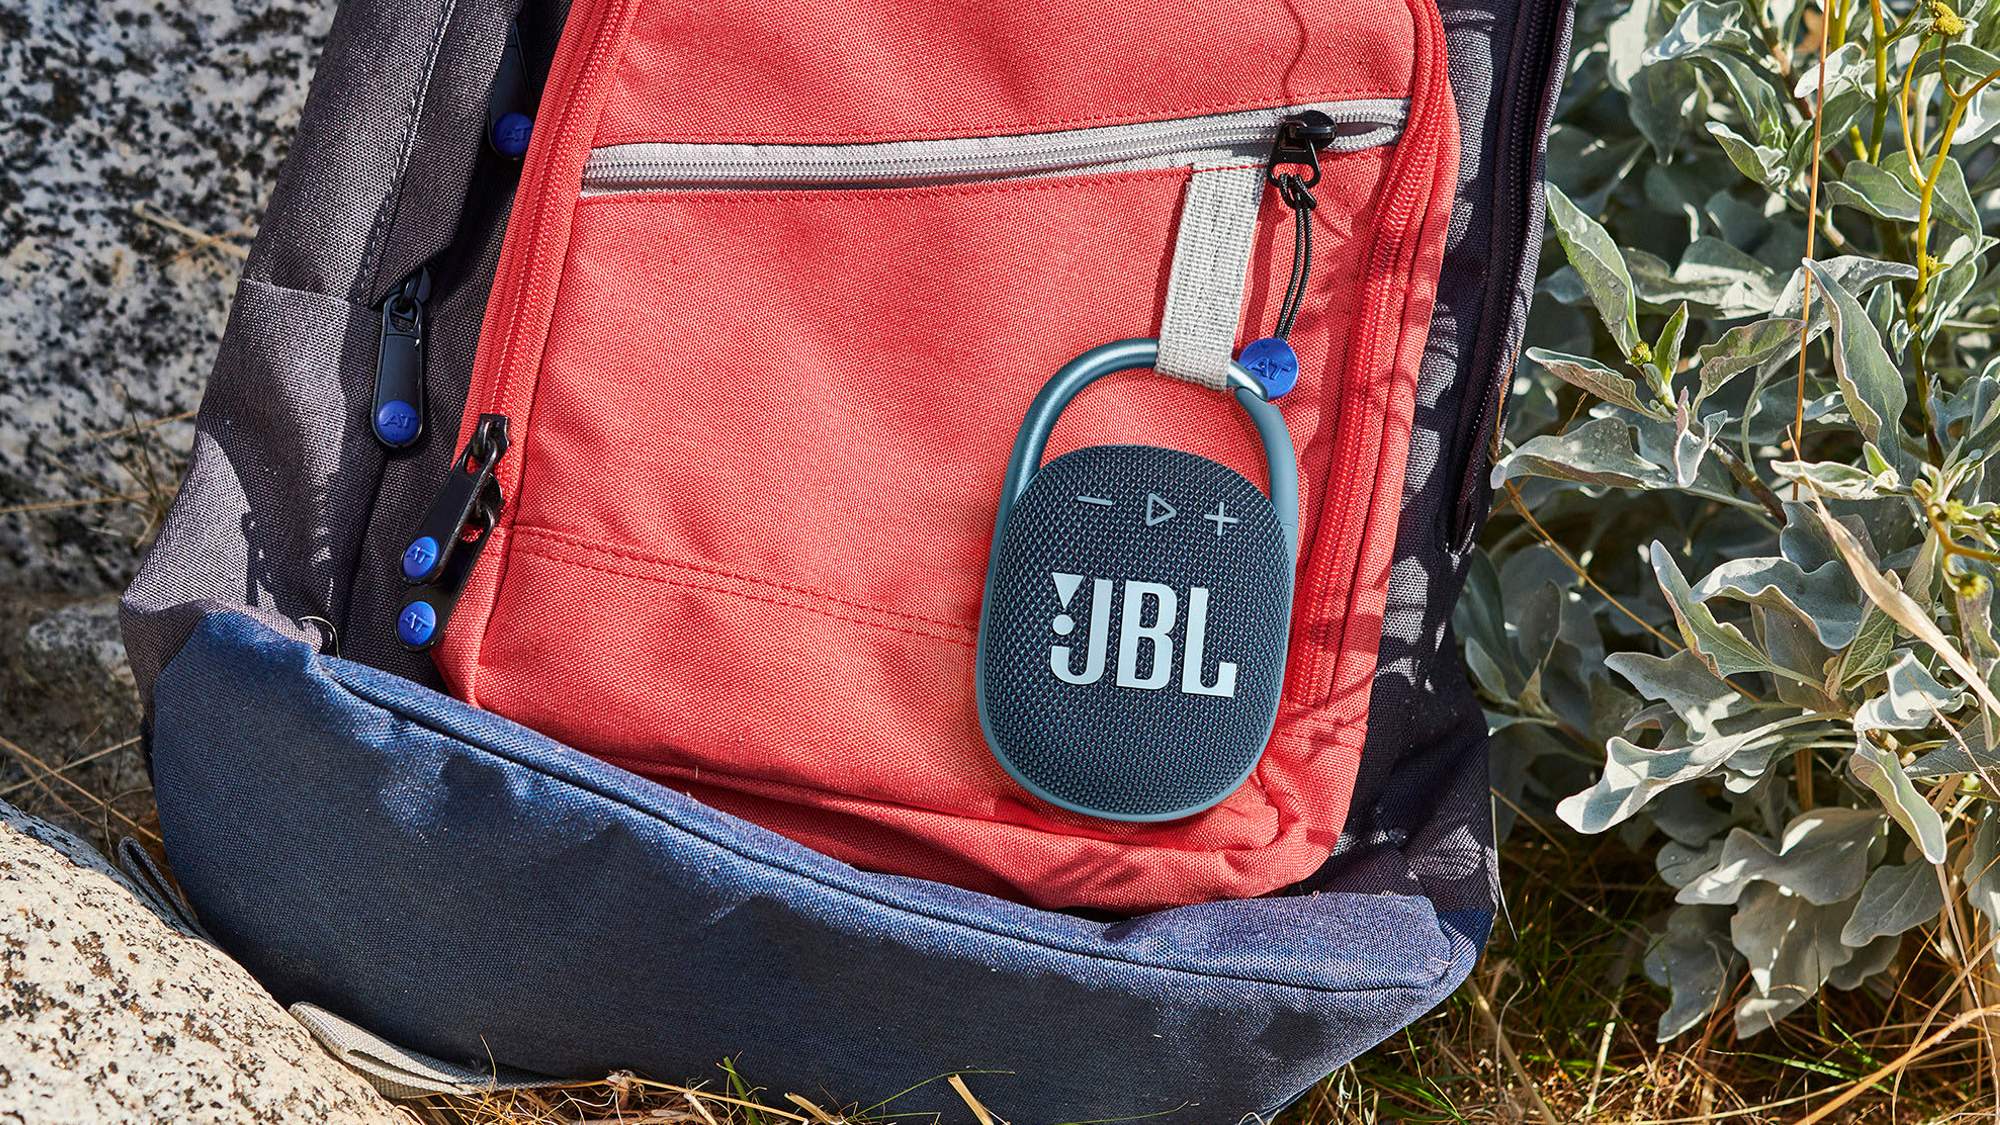 JBL Clip 4 on a backpack